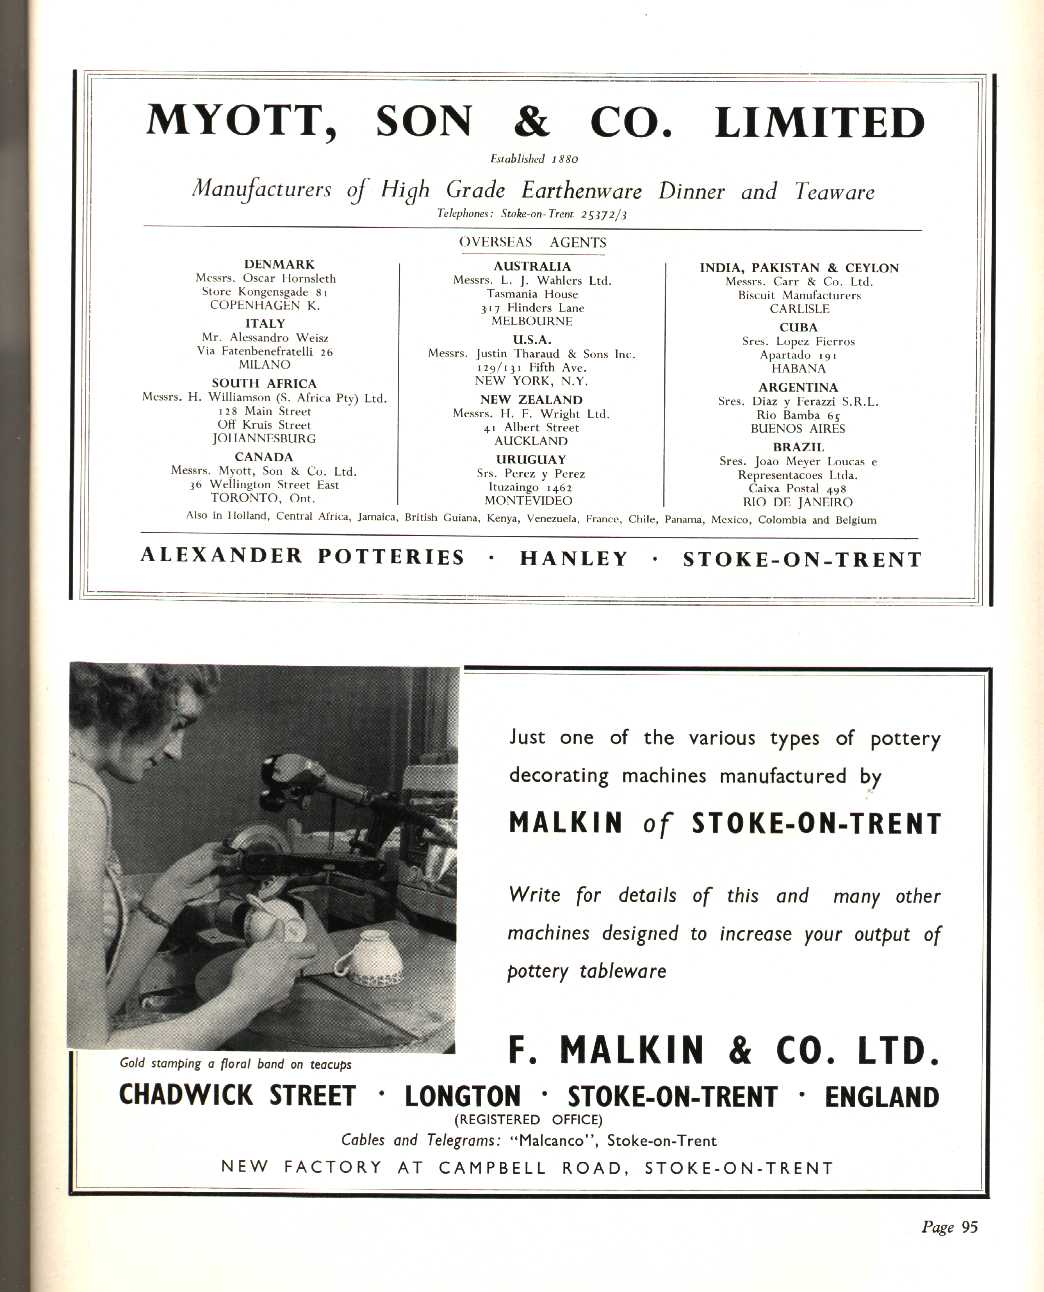 Myott, Son & Co. Ltd (Hanley) (Potters), F. Malkin & Co Ltd. (Longton) (manufacturers of pottery decorating machines)